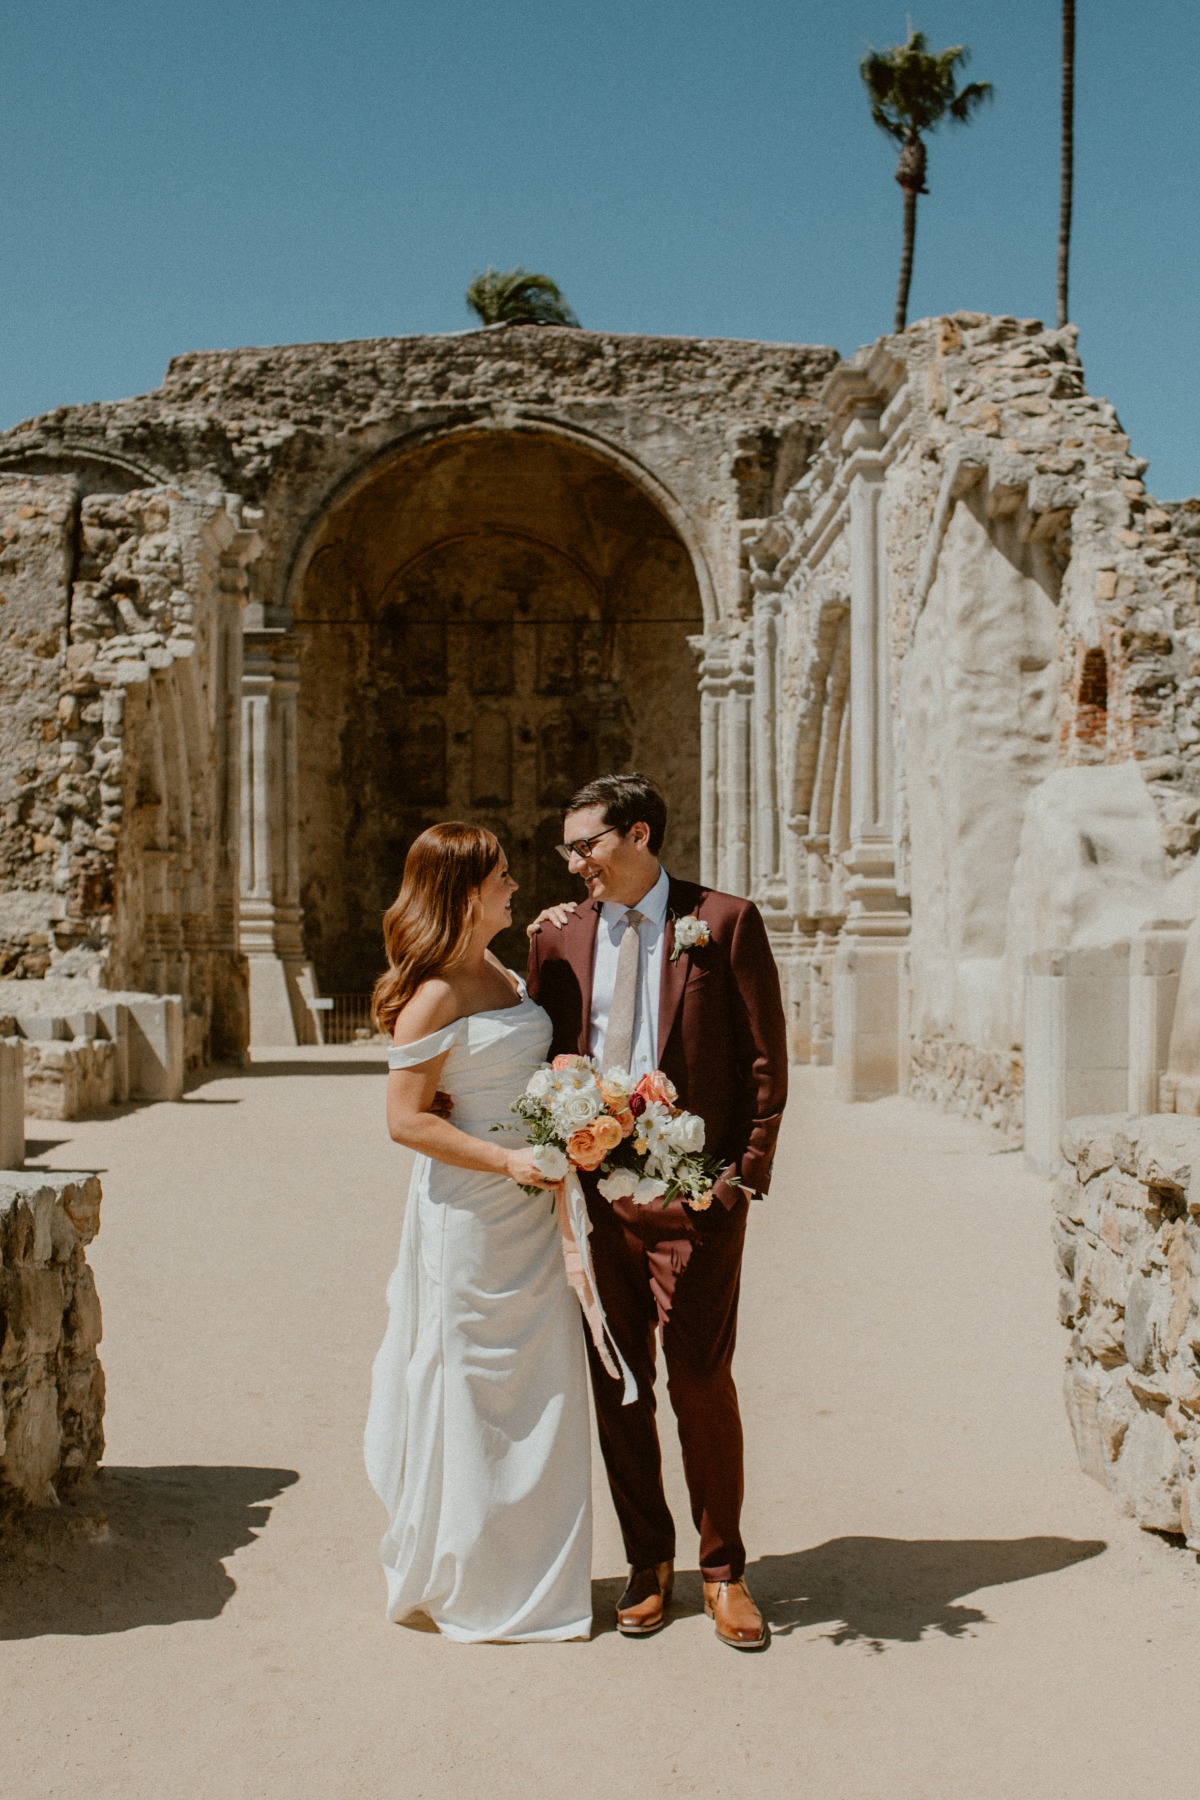 Greek architecture-inspired wedding venue